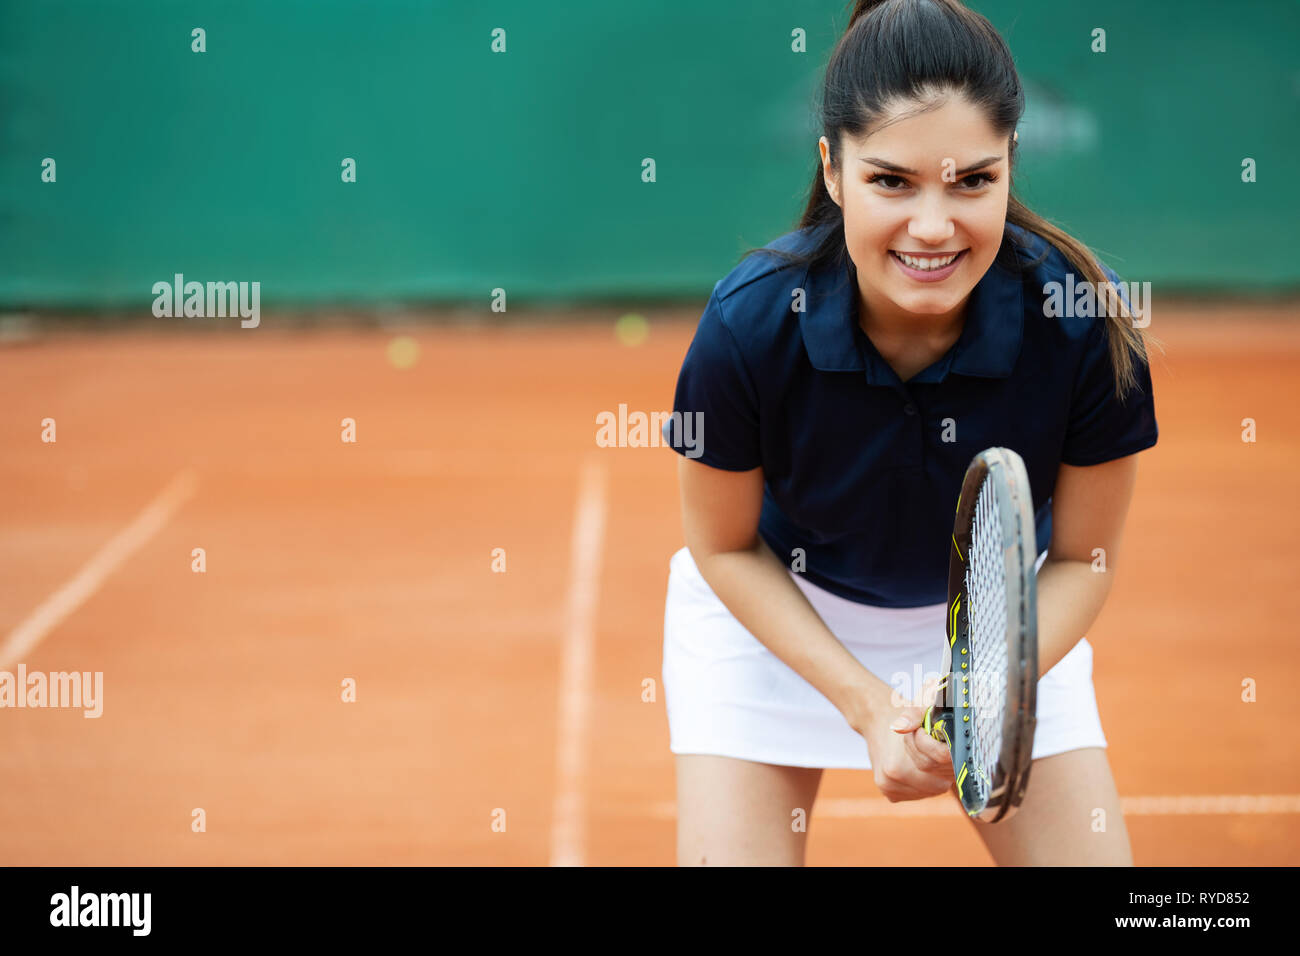 Felice montare ragazza giocando a tennis insieme. Sport concept Foto Stock